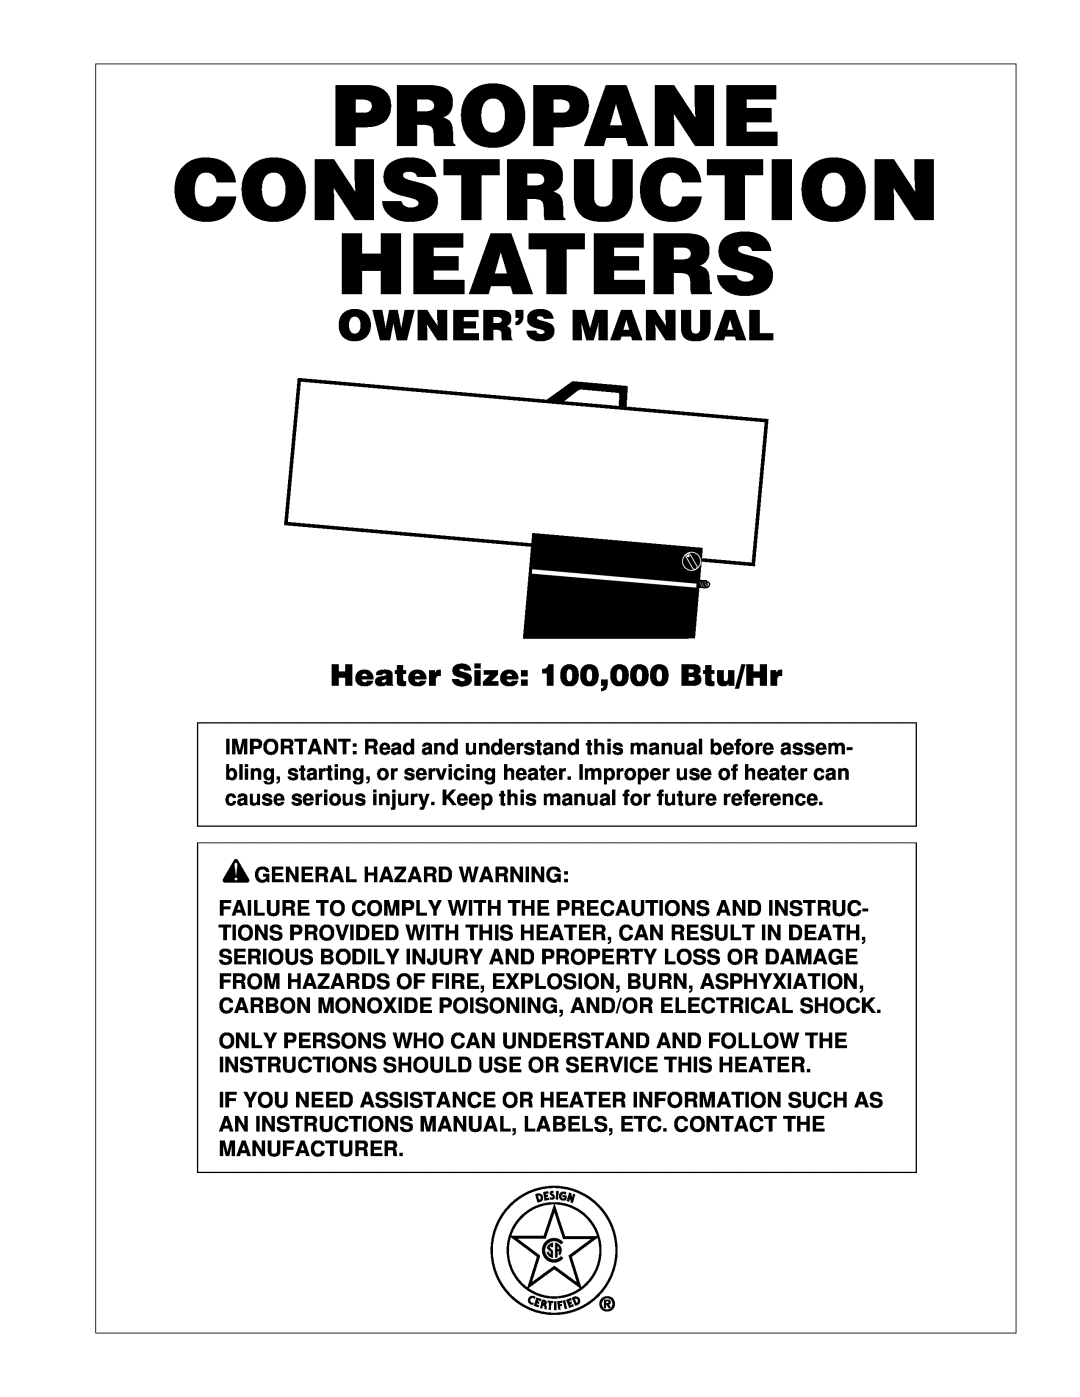 Desa PROPANE CONSTRUCTION HEATERS owner manual Propane Construction Heaters, Heater Size 100,000 Btu/Hr 